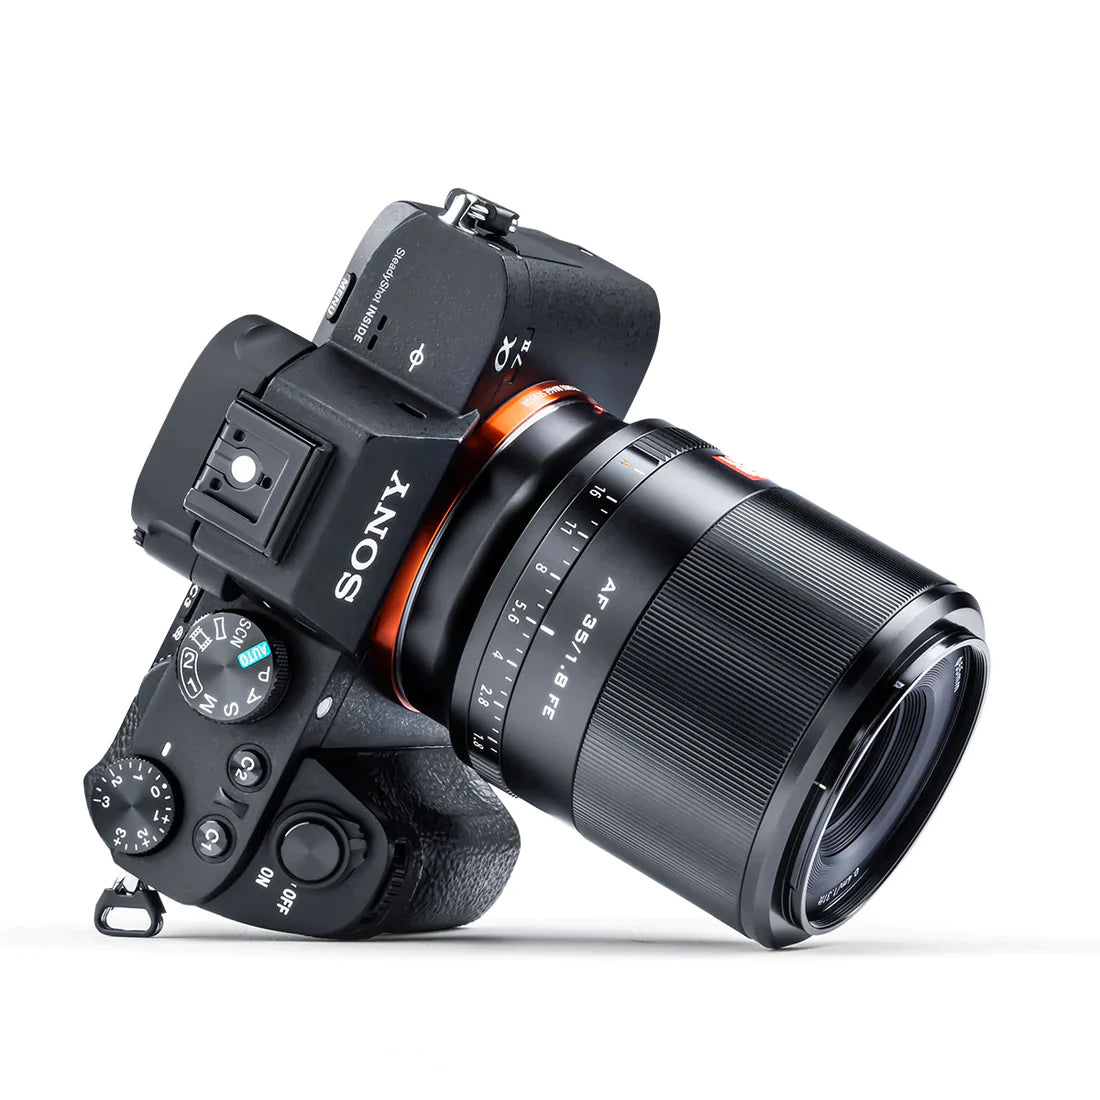 Viltrox AF 35mm F1.8 Full-frame for Sony E-mount Mirrorless Cameras - Vitopal